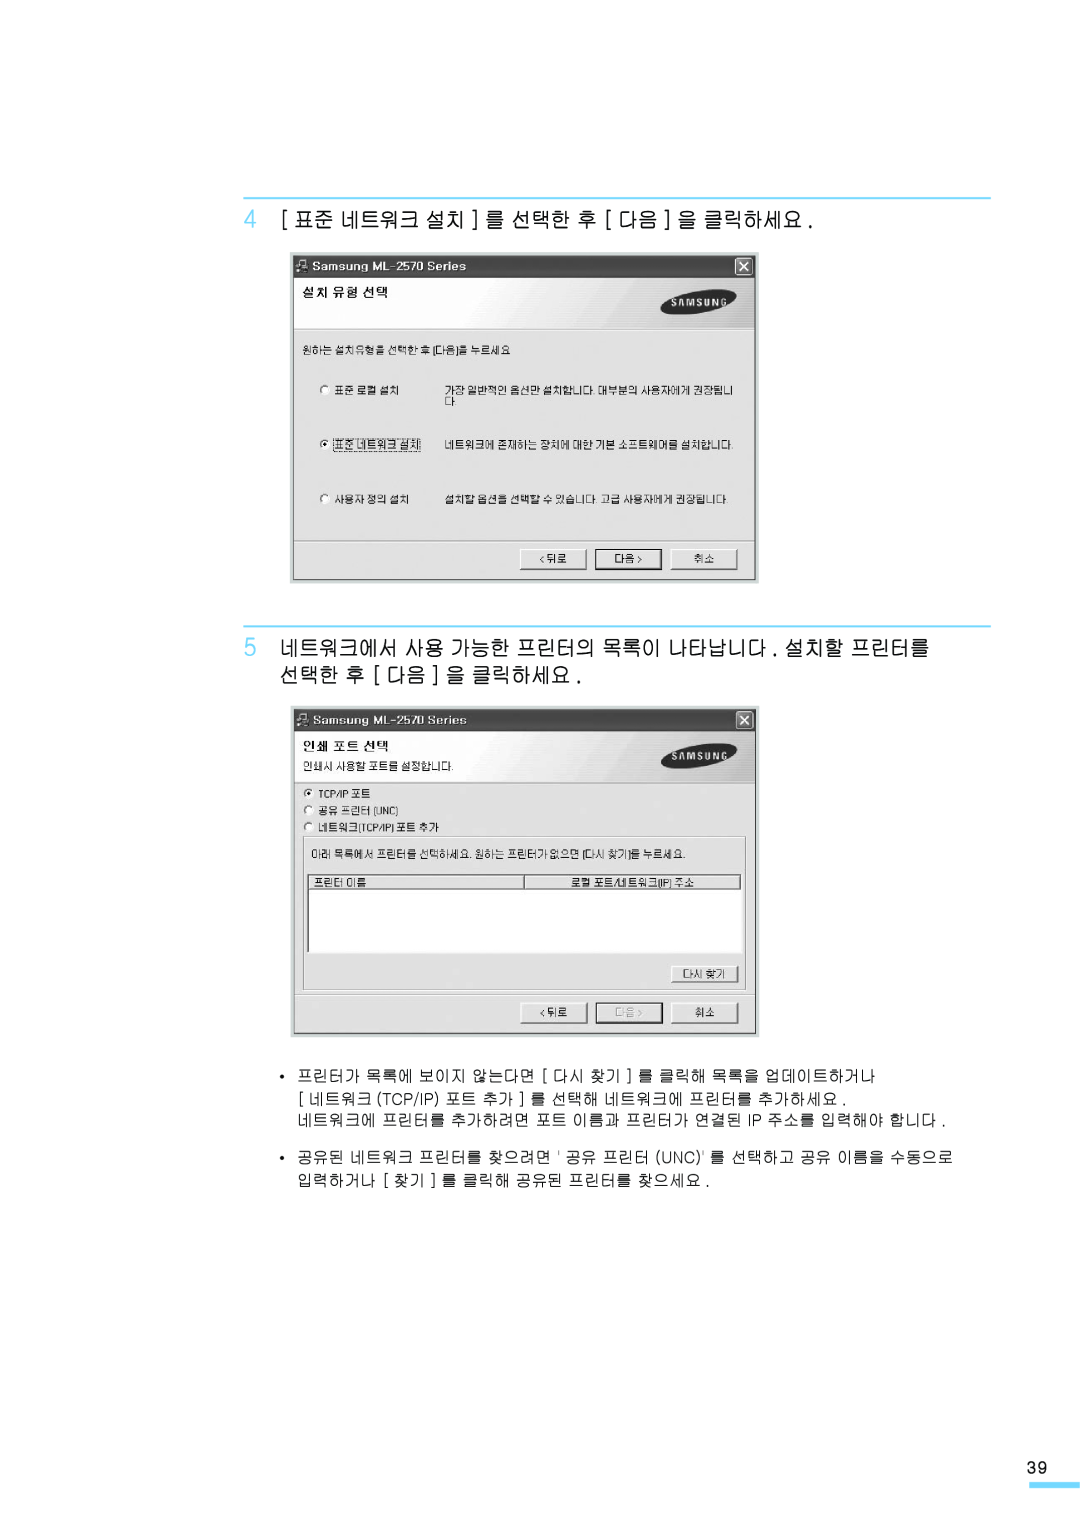 Samsung ML-2571N manual 4 표준 네트워크 설치 를 선택한 후 다음 을 클릭하세요, 5 네트워크에서 사용 가능한 프린터의 목록이 나타납니다 . 설치할 프린터를 선택한 후 다음 을 클릭하세요 